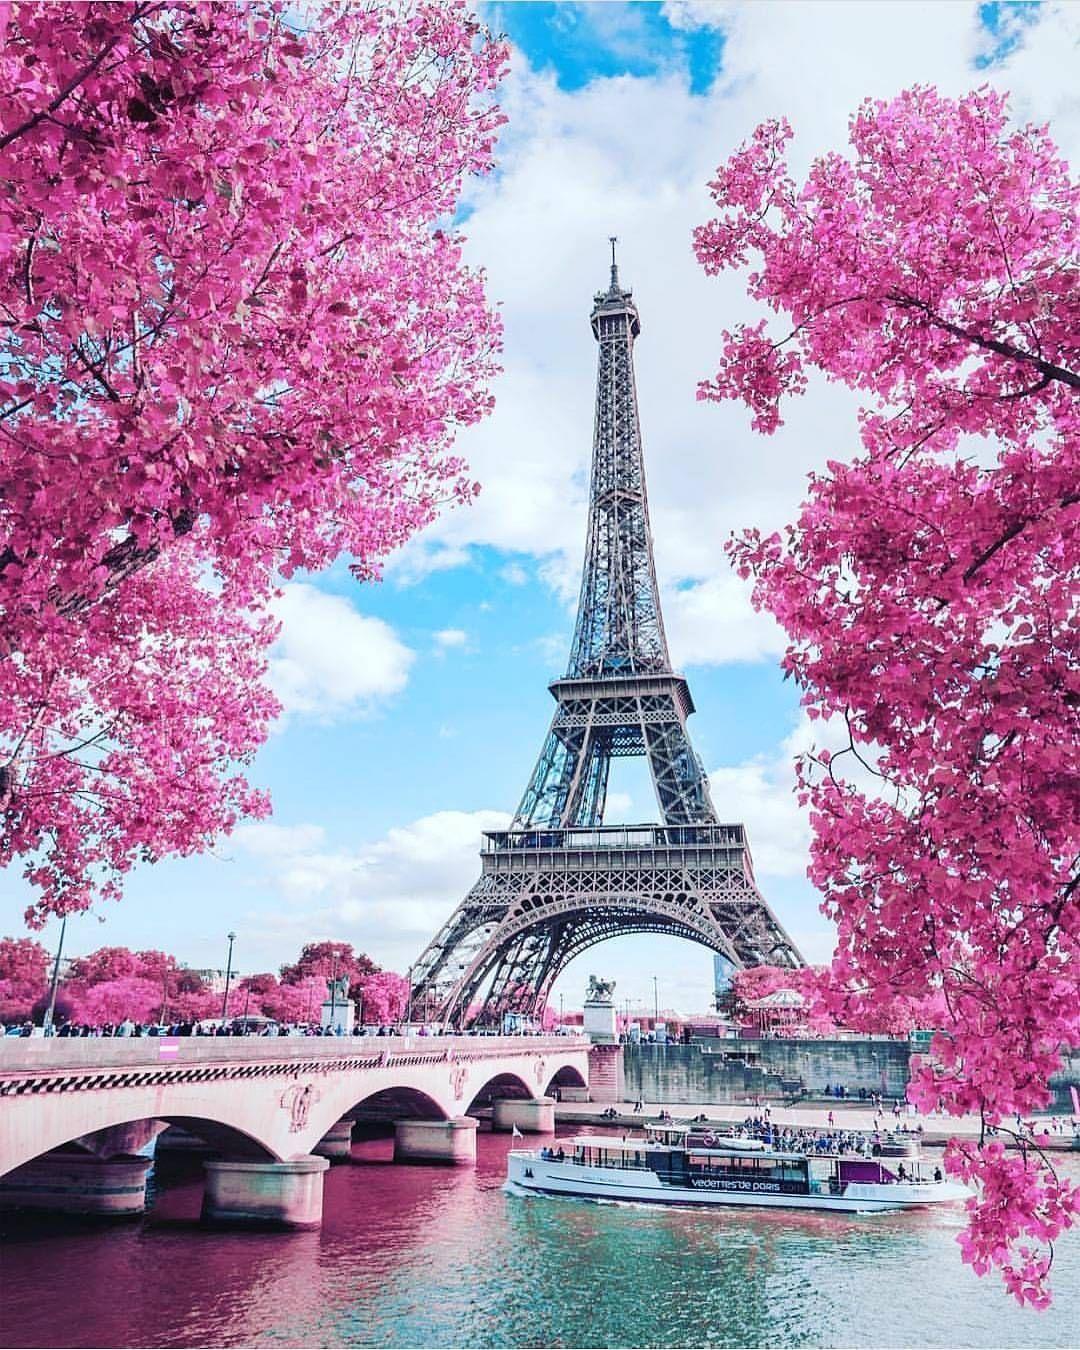 Pink Paris iPhone Wallpapers - Top Free ...